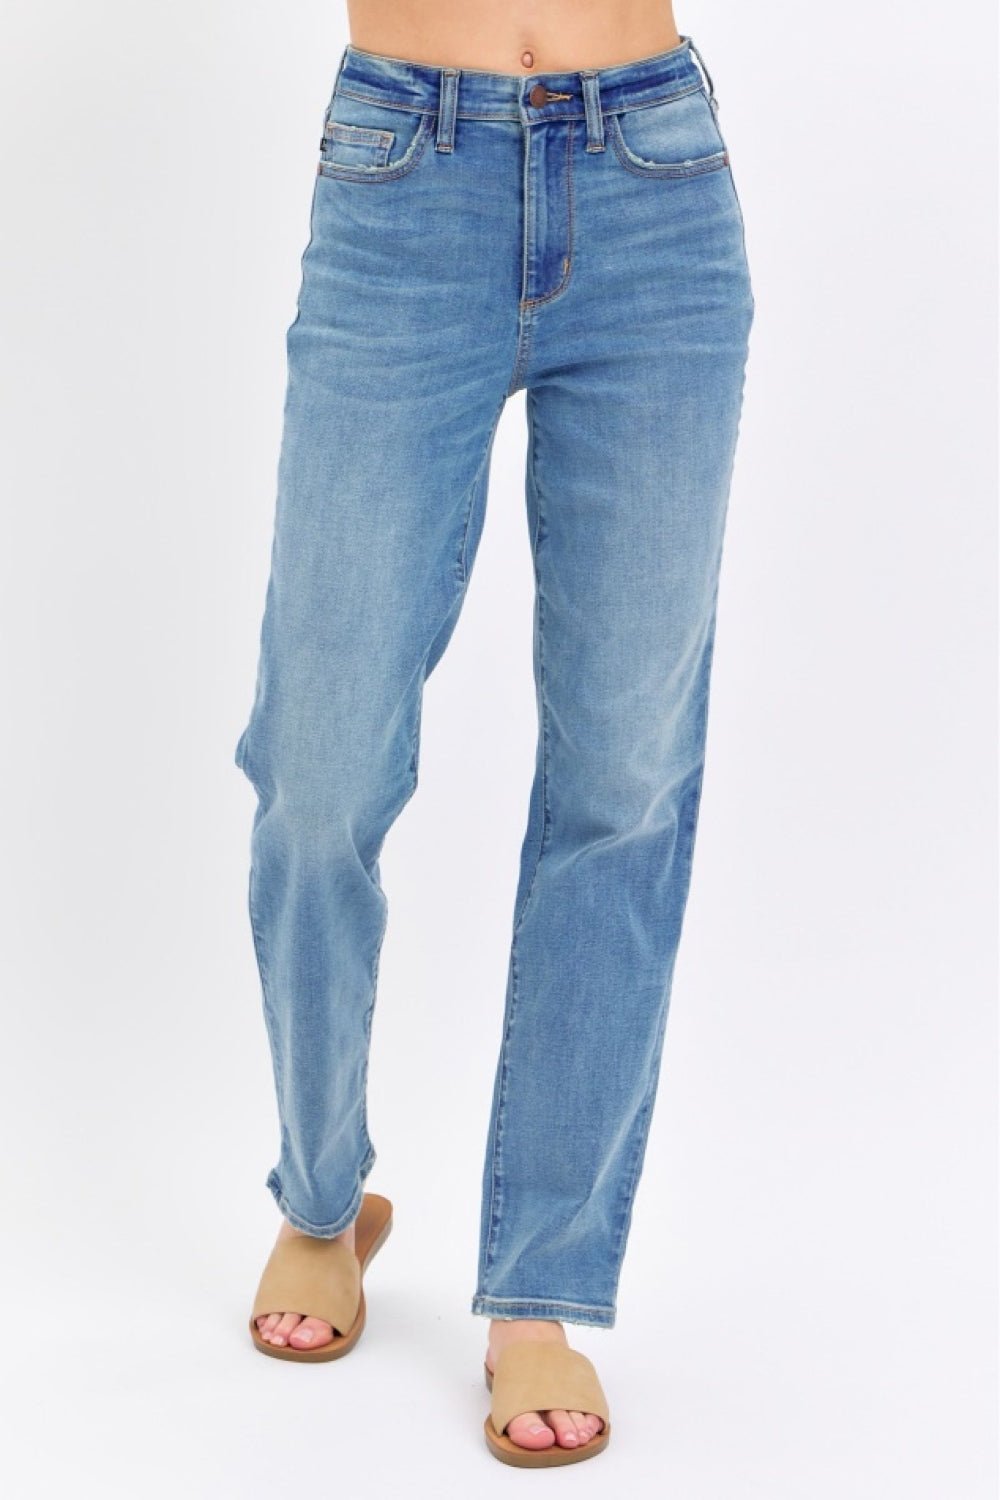 Judy Blue High Waist Straight Jeans - My Threaded Apparel | Online Women's Boutique - denim jeans